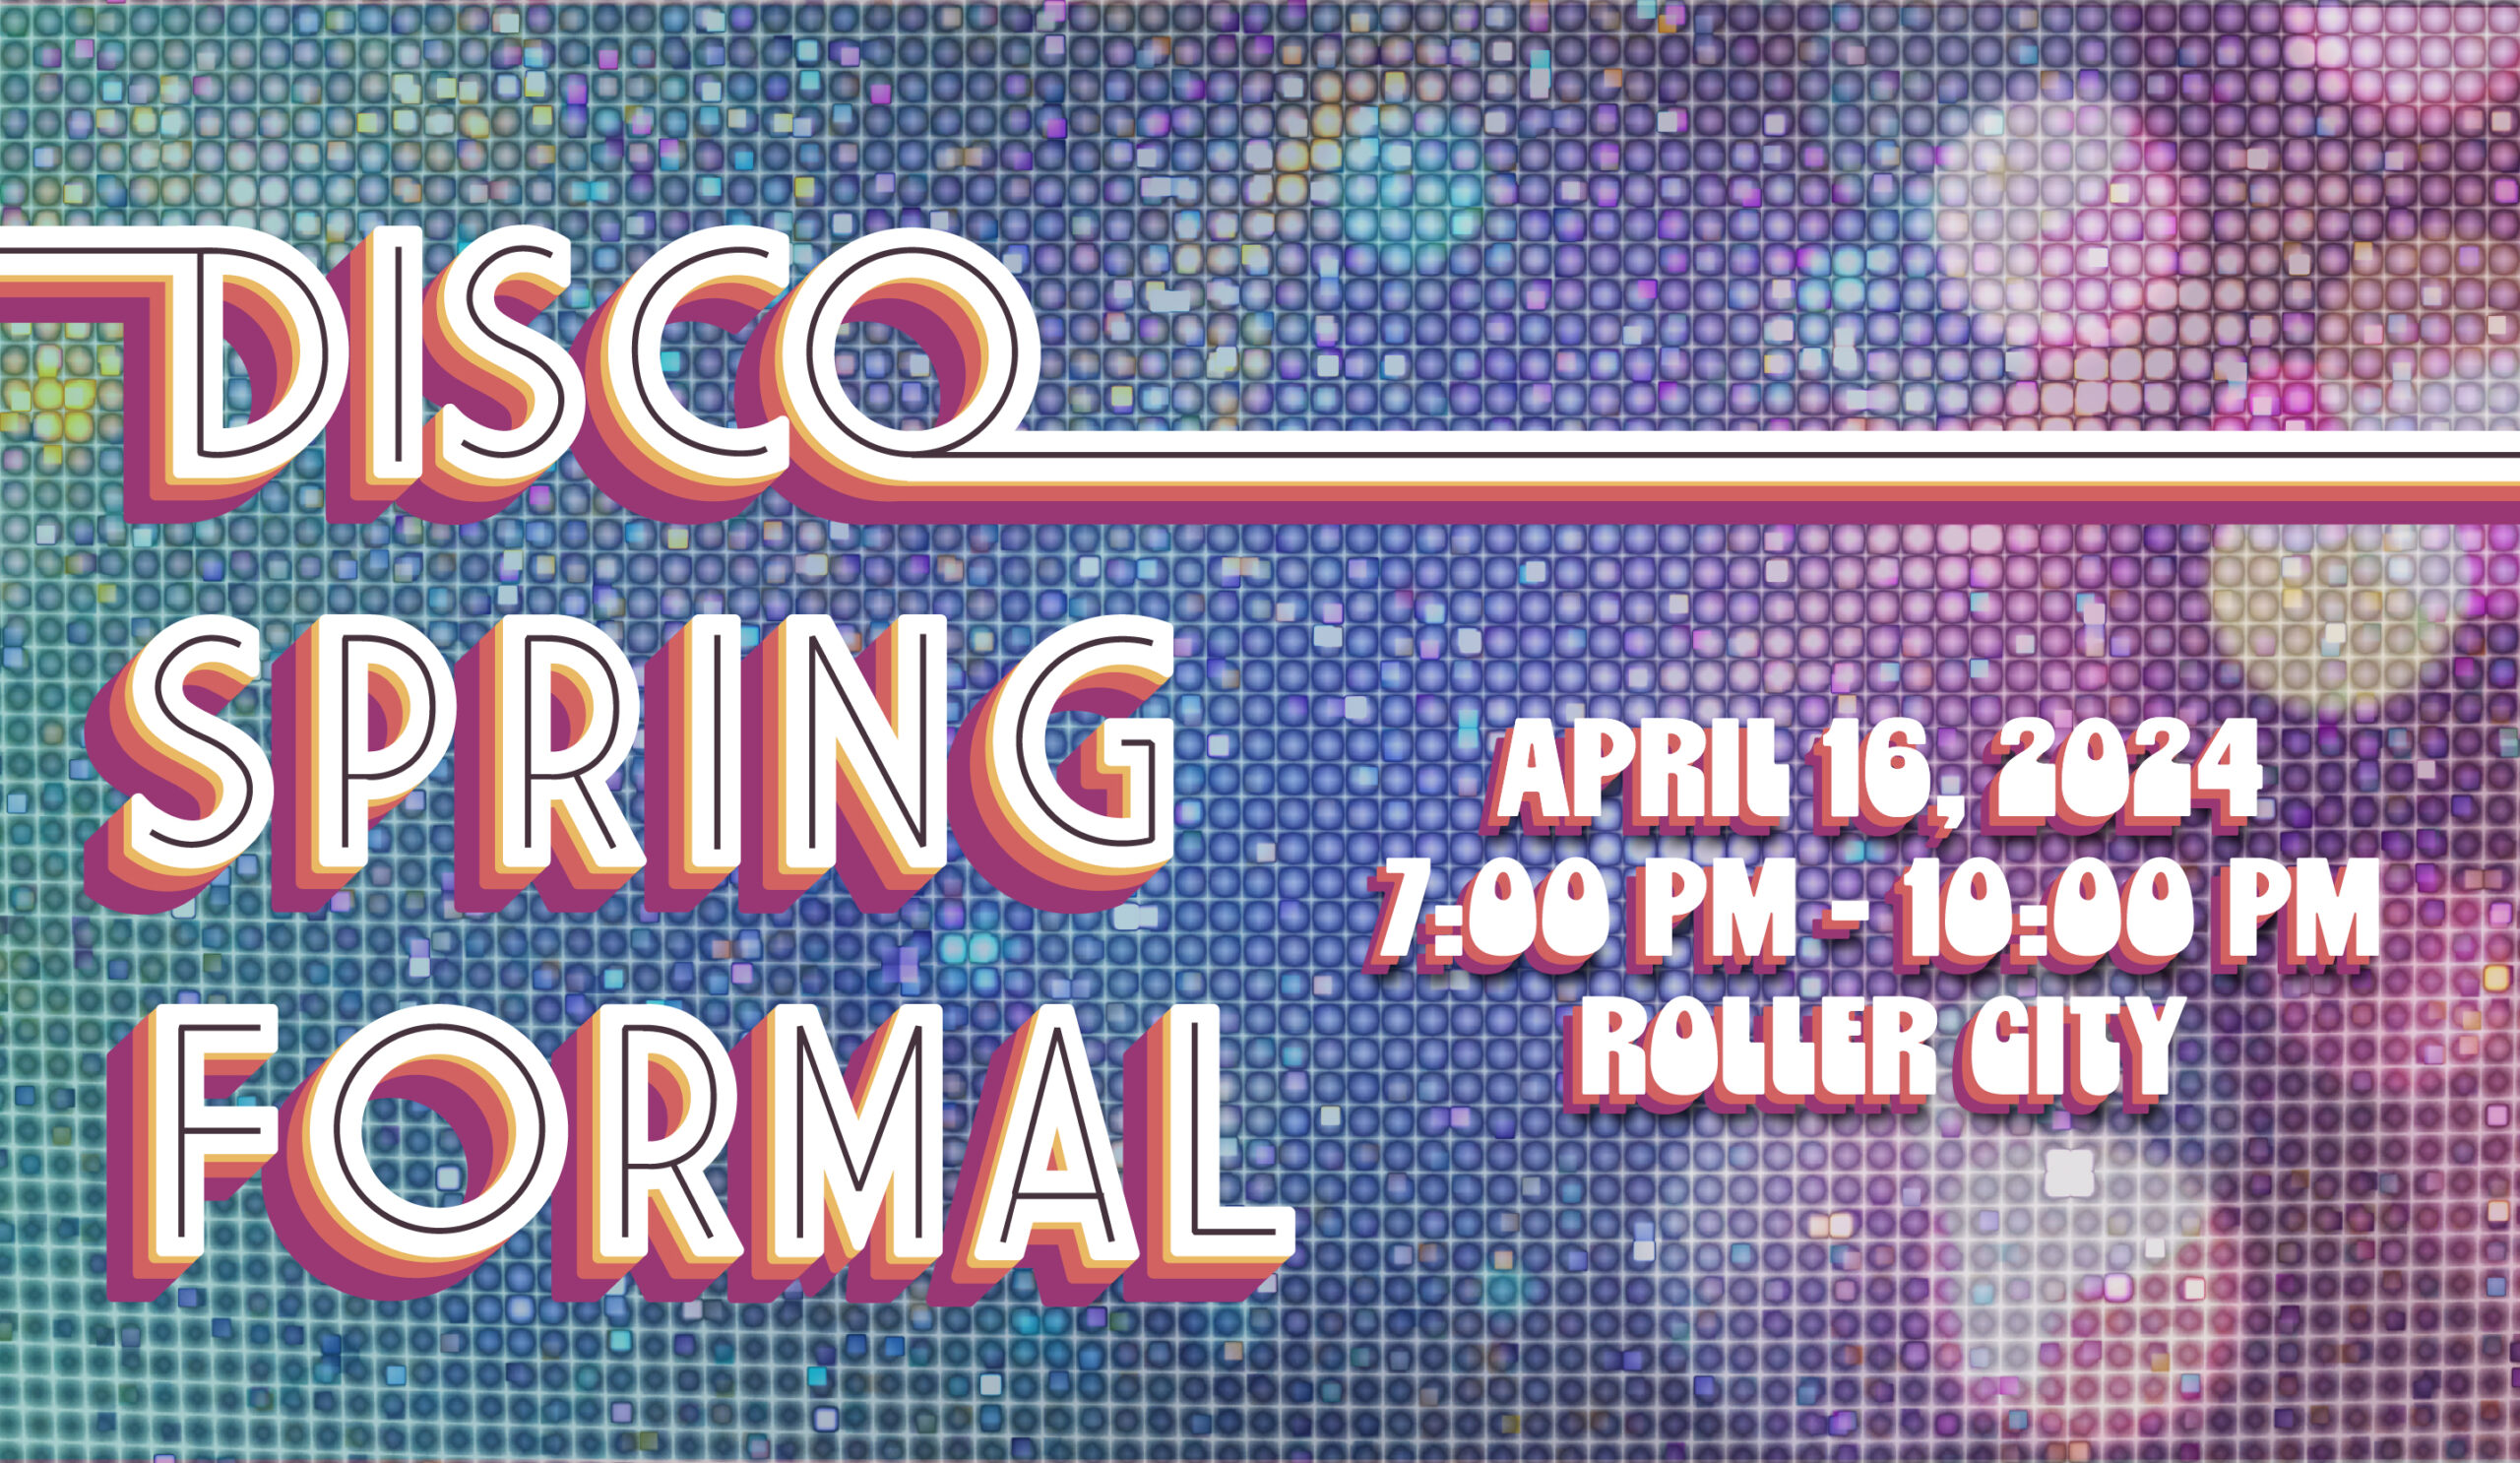 Disco Spring Formal